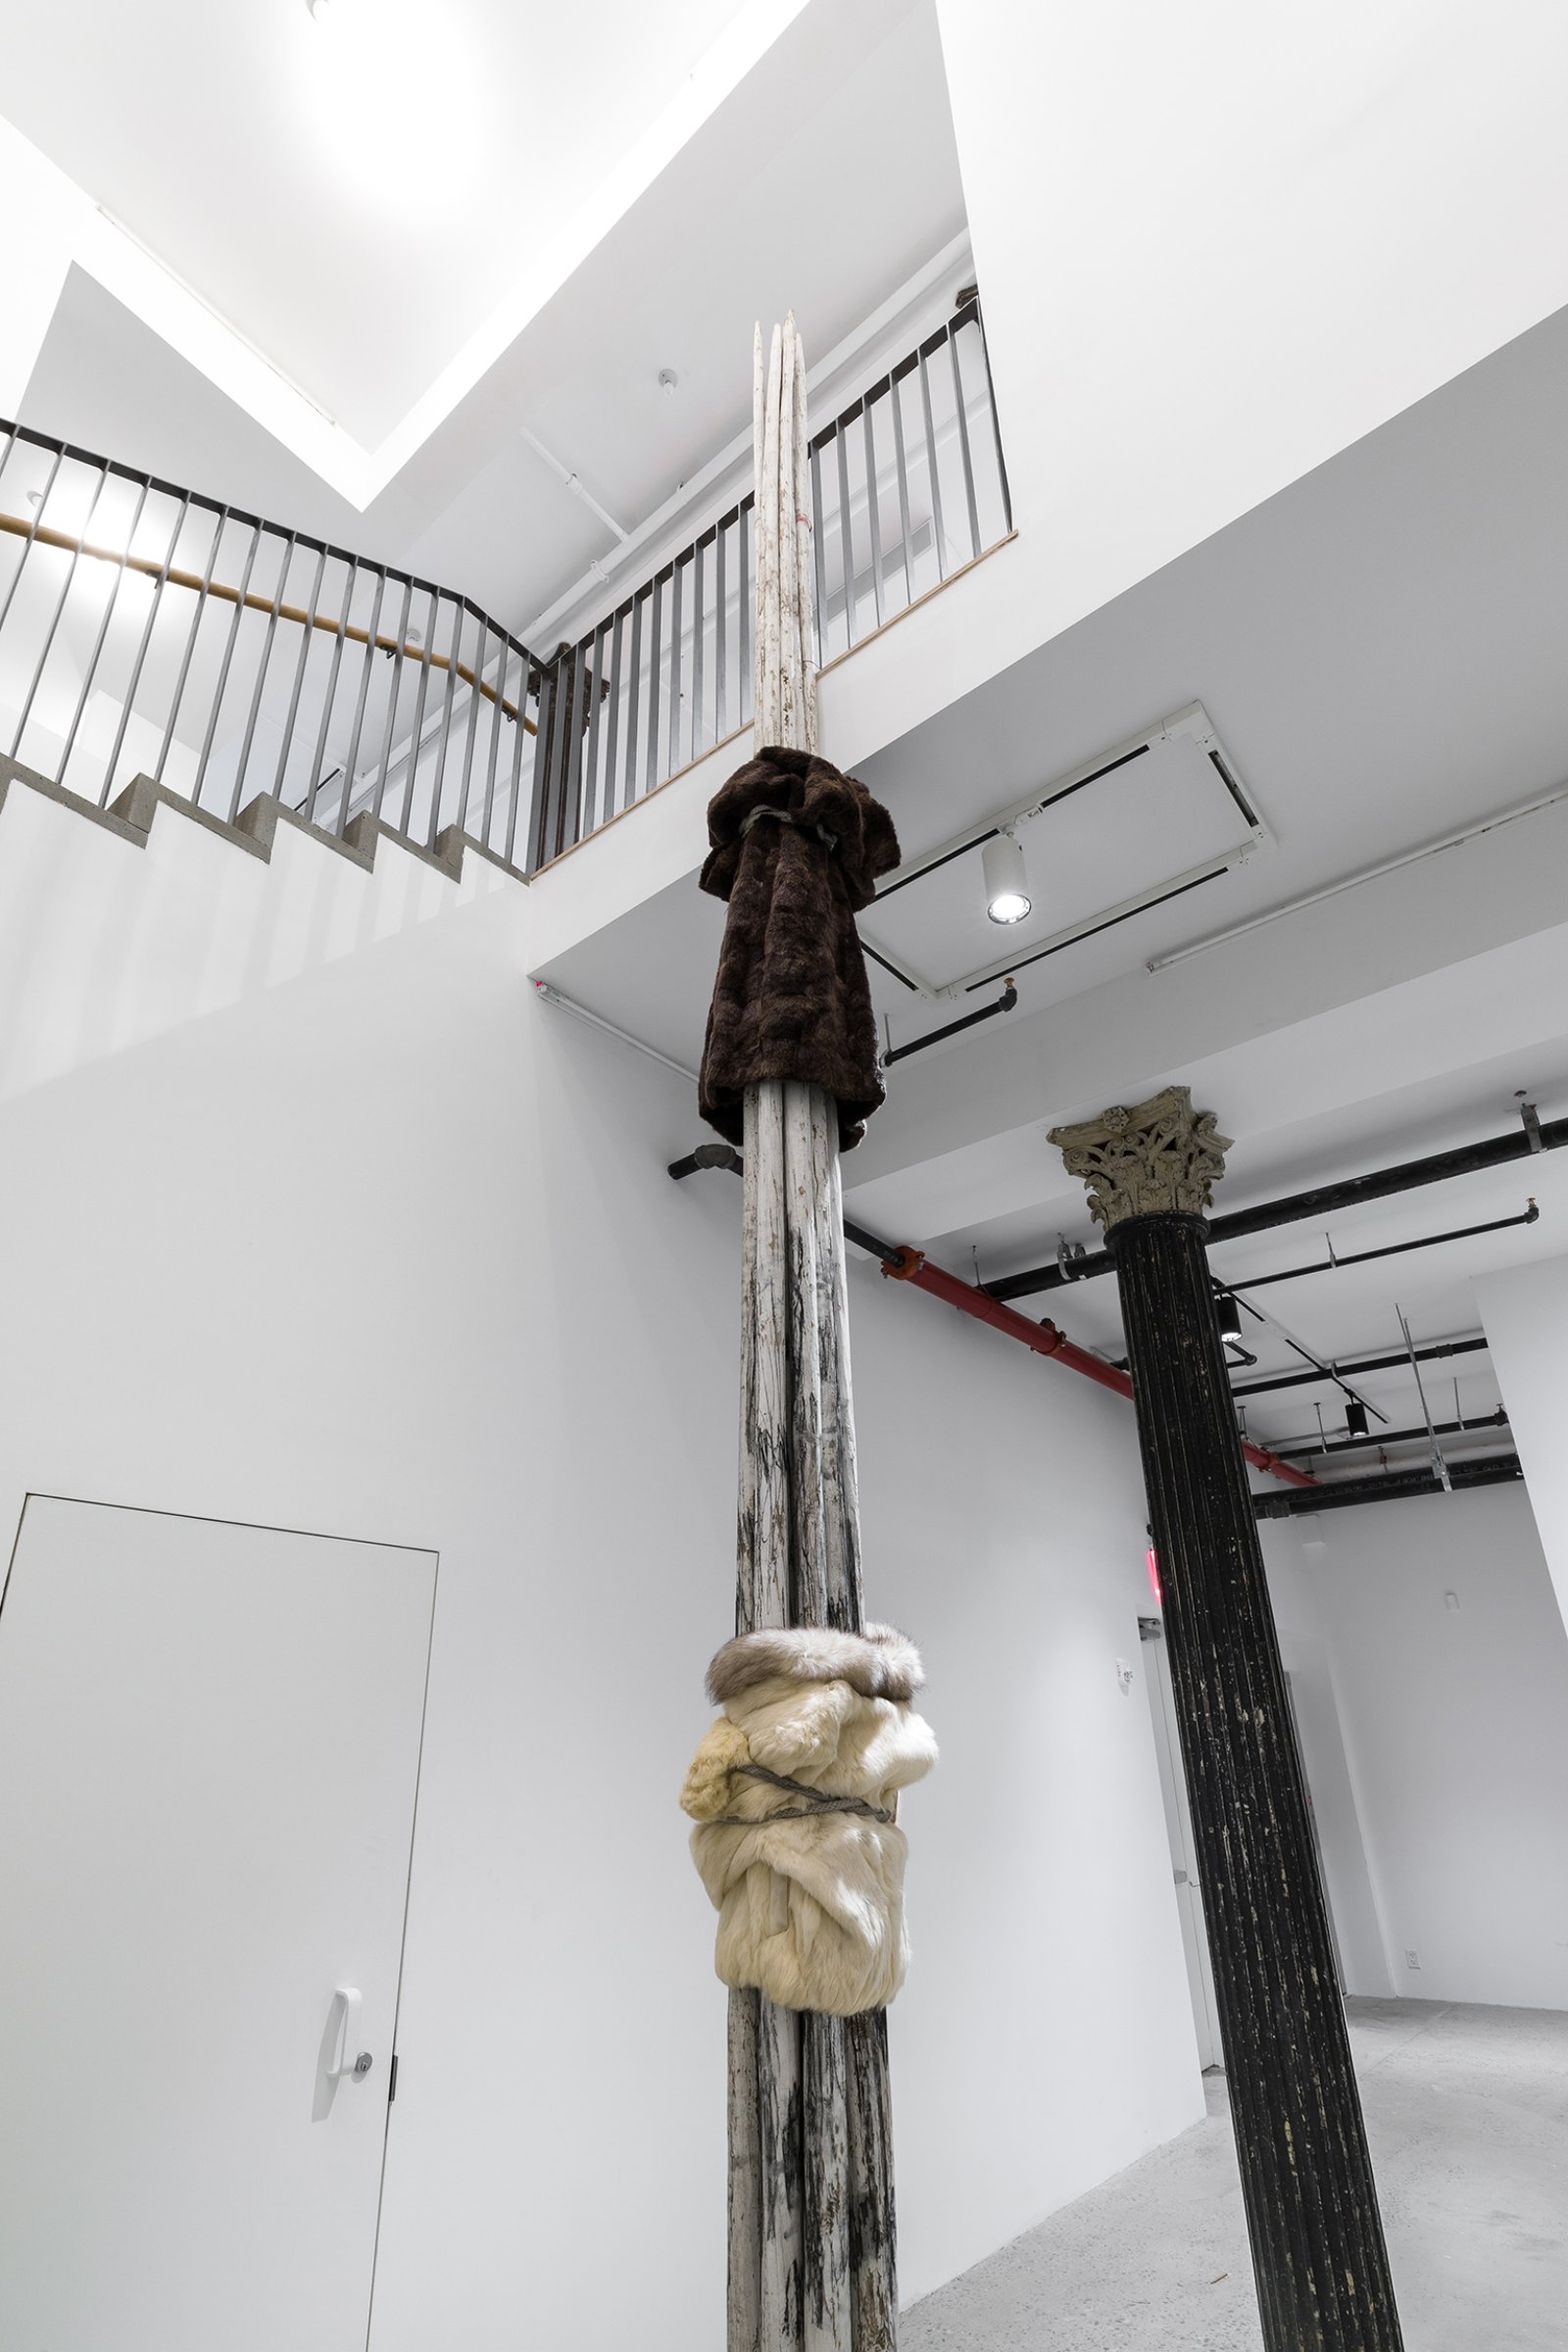 Duane Linklater, landlesscolumnbundle (detail), 2019, tipi poles, white paint, charcoal, rabbit fur coat, mink fur coat, rope, 243 x 10 x 10 in. (617 x 25 x 25 cm). Installation view, Artists Space, New York, USA, 2019